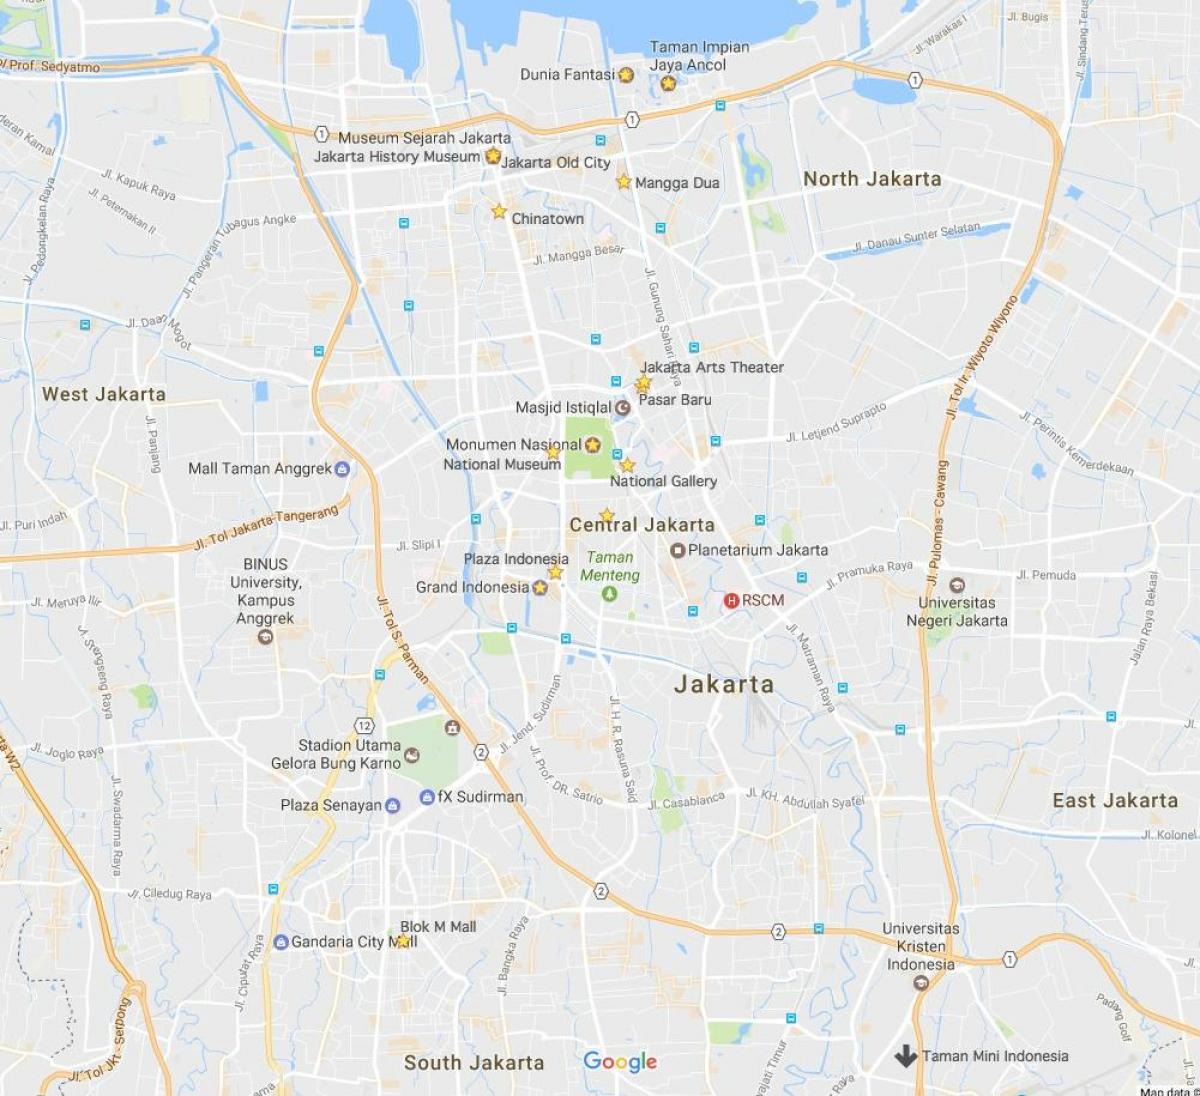 kort af Jakarta næturlíf